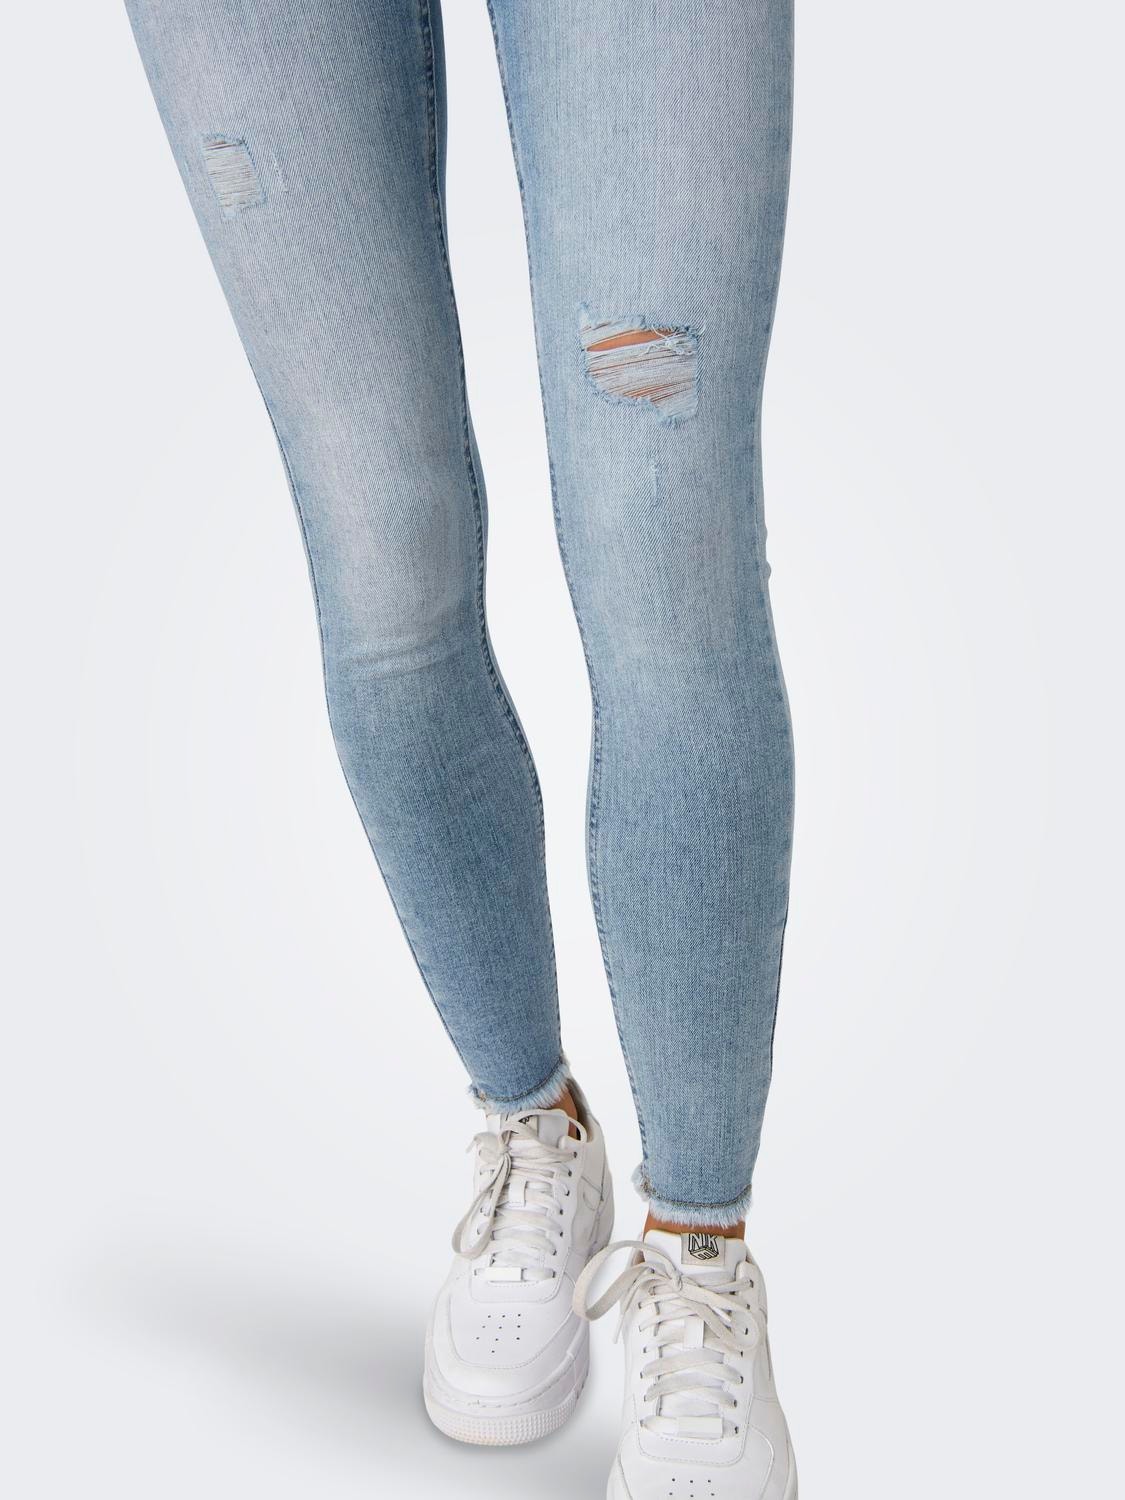 ONLY Jeans Skinny Fit Vita media -Light Medium Blue Denim - 15282346